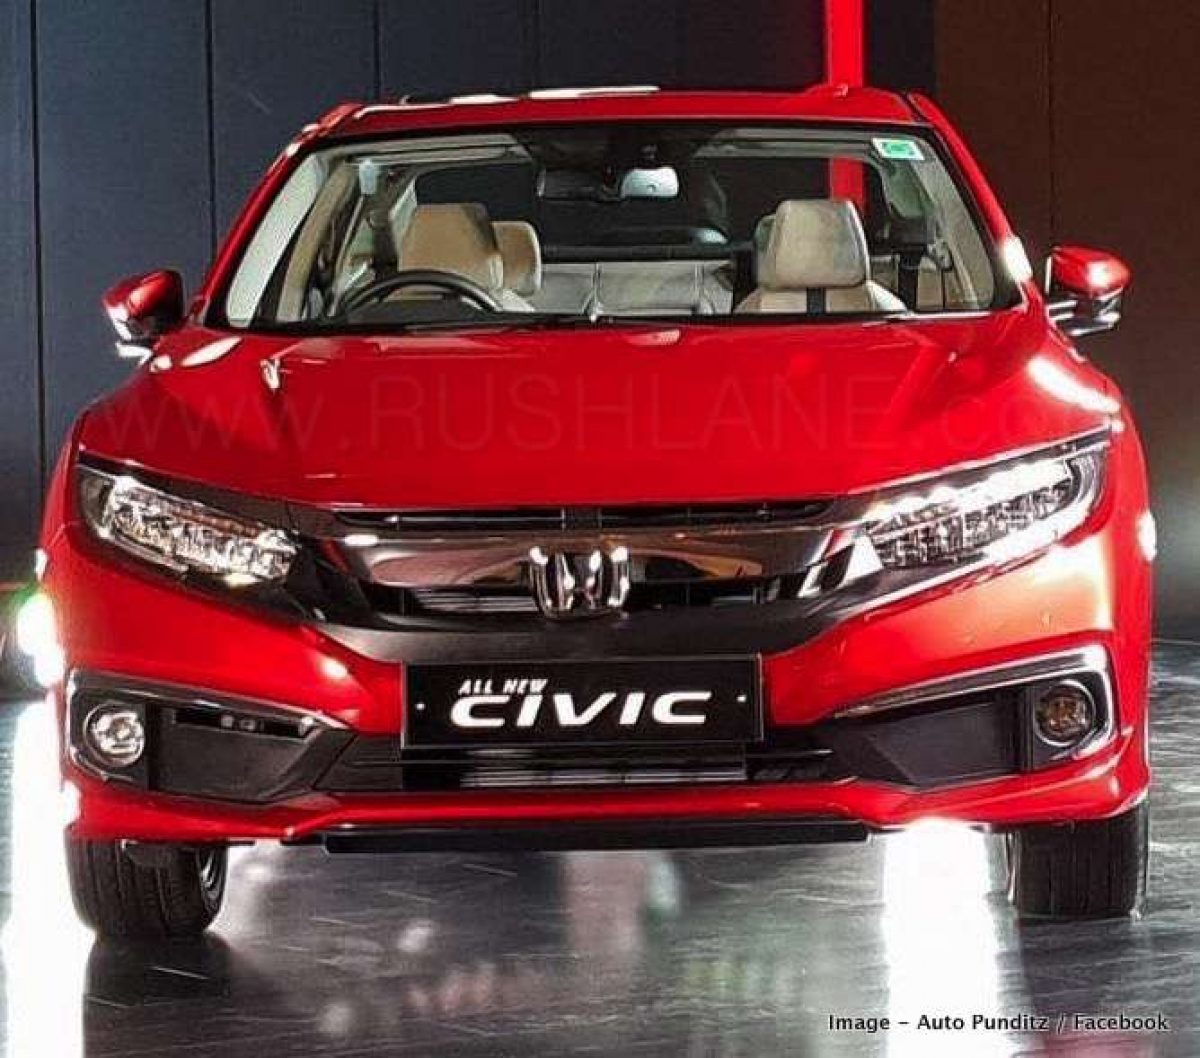 Honda Civic specs revealed - Diesel mileage at 26.8